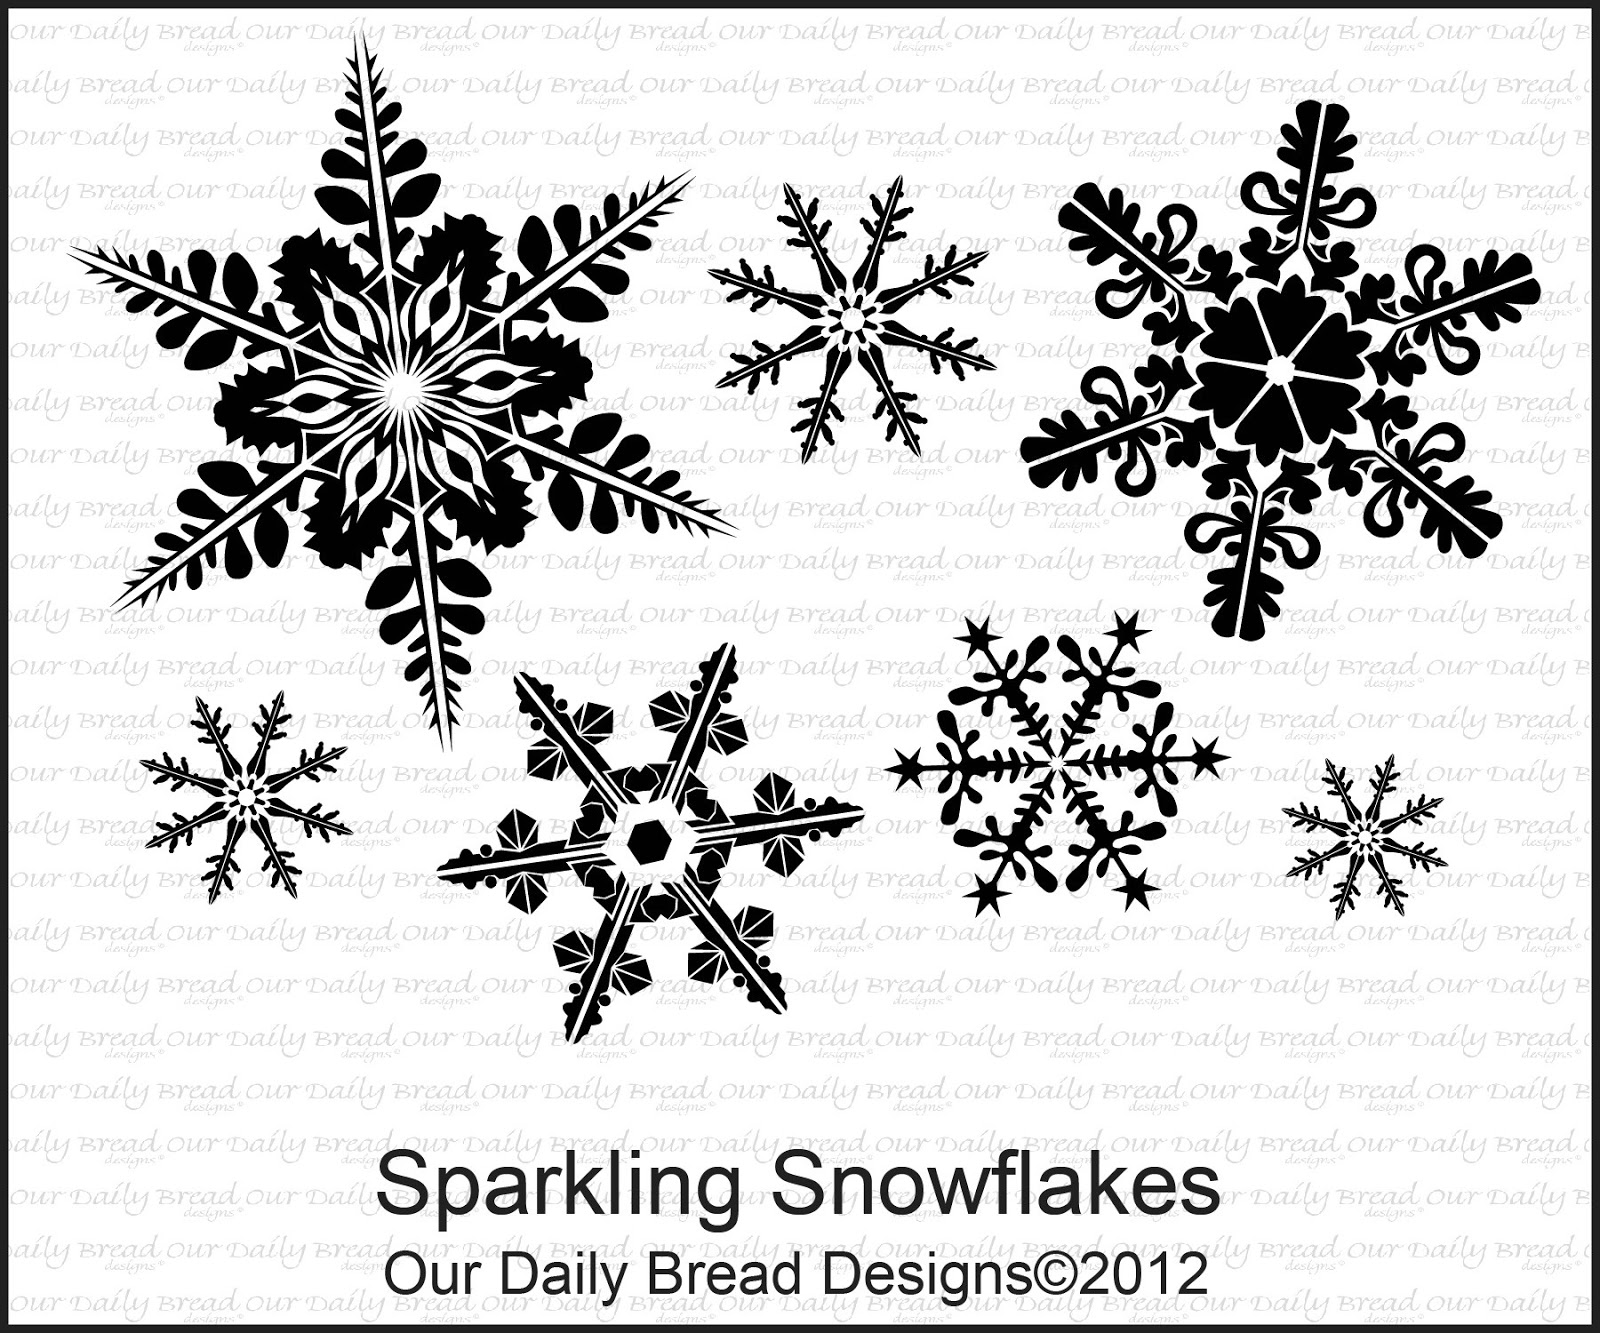 http://1.bp.blogspot.com/-bCFhJxjGYAQ/VEHFGxvEeAI/AAAAAAAAG40/sD8T9vVrC3I/s1600/sparkling_snowflakes.jpg